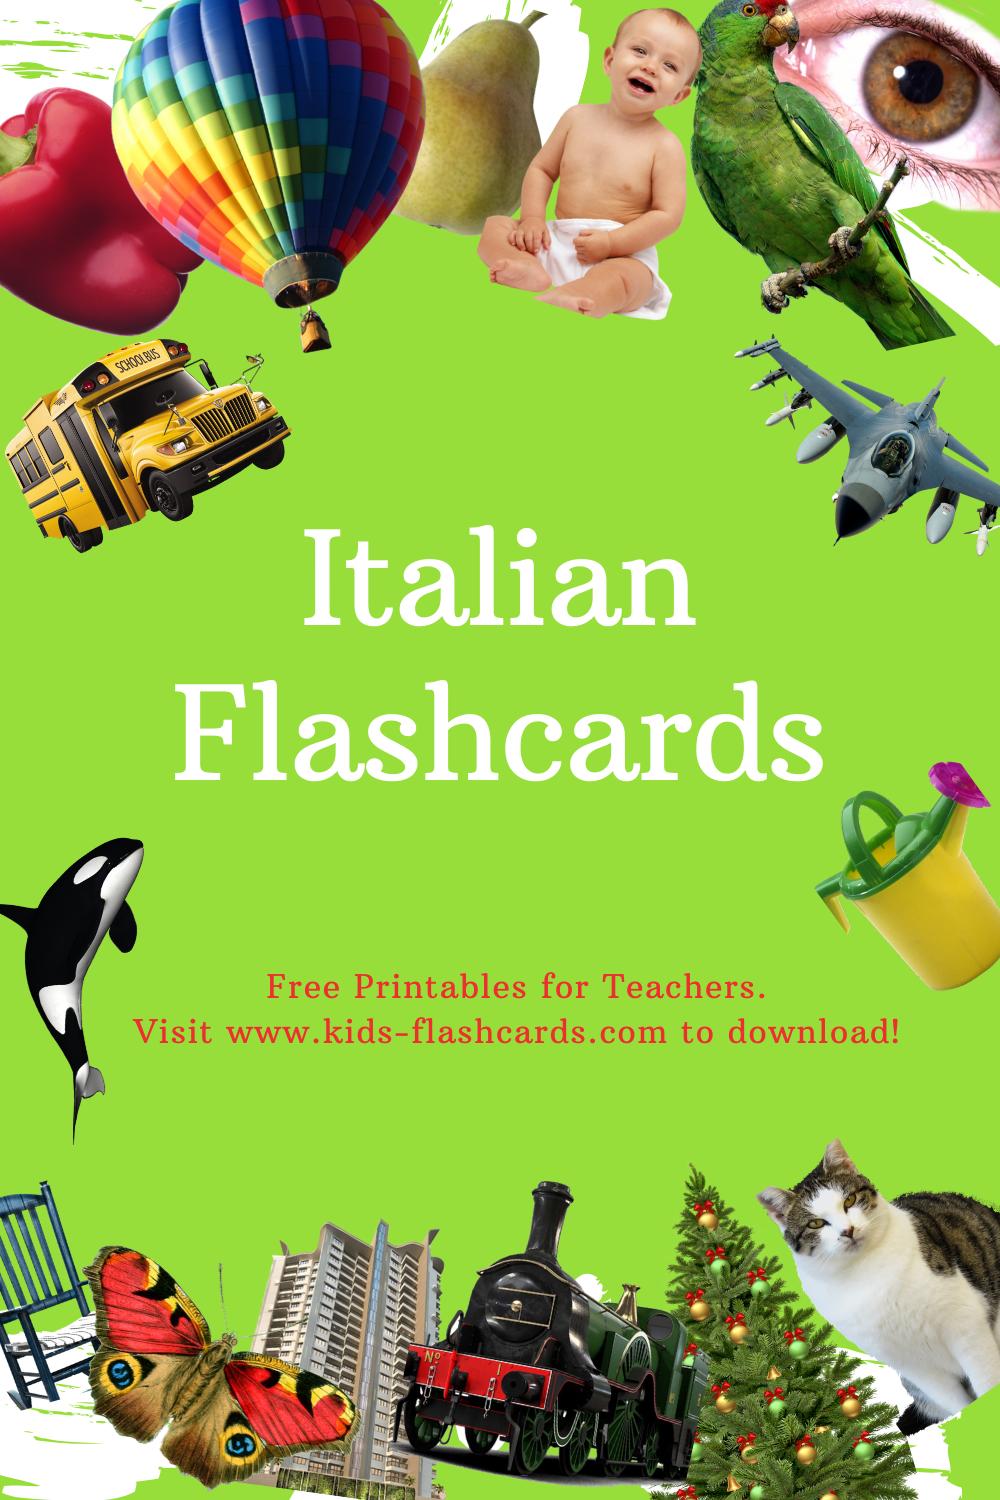 Worksheets to learn Italian language